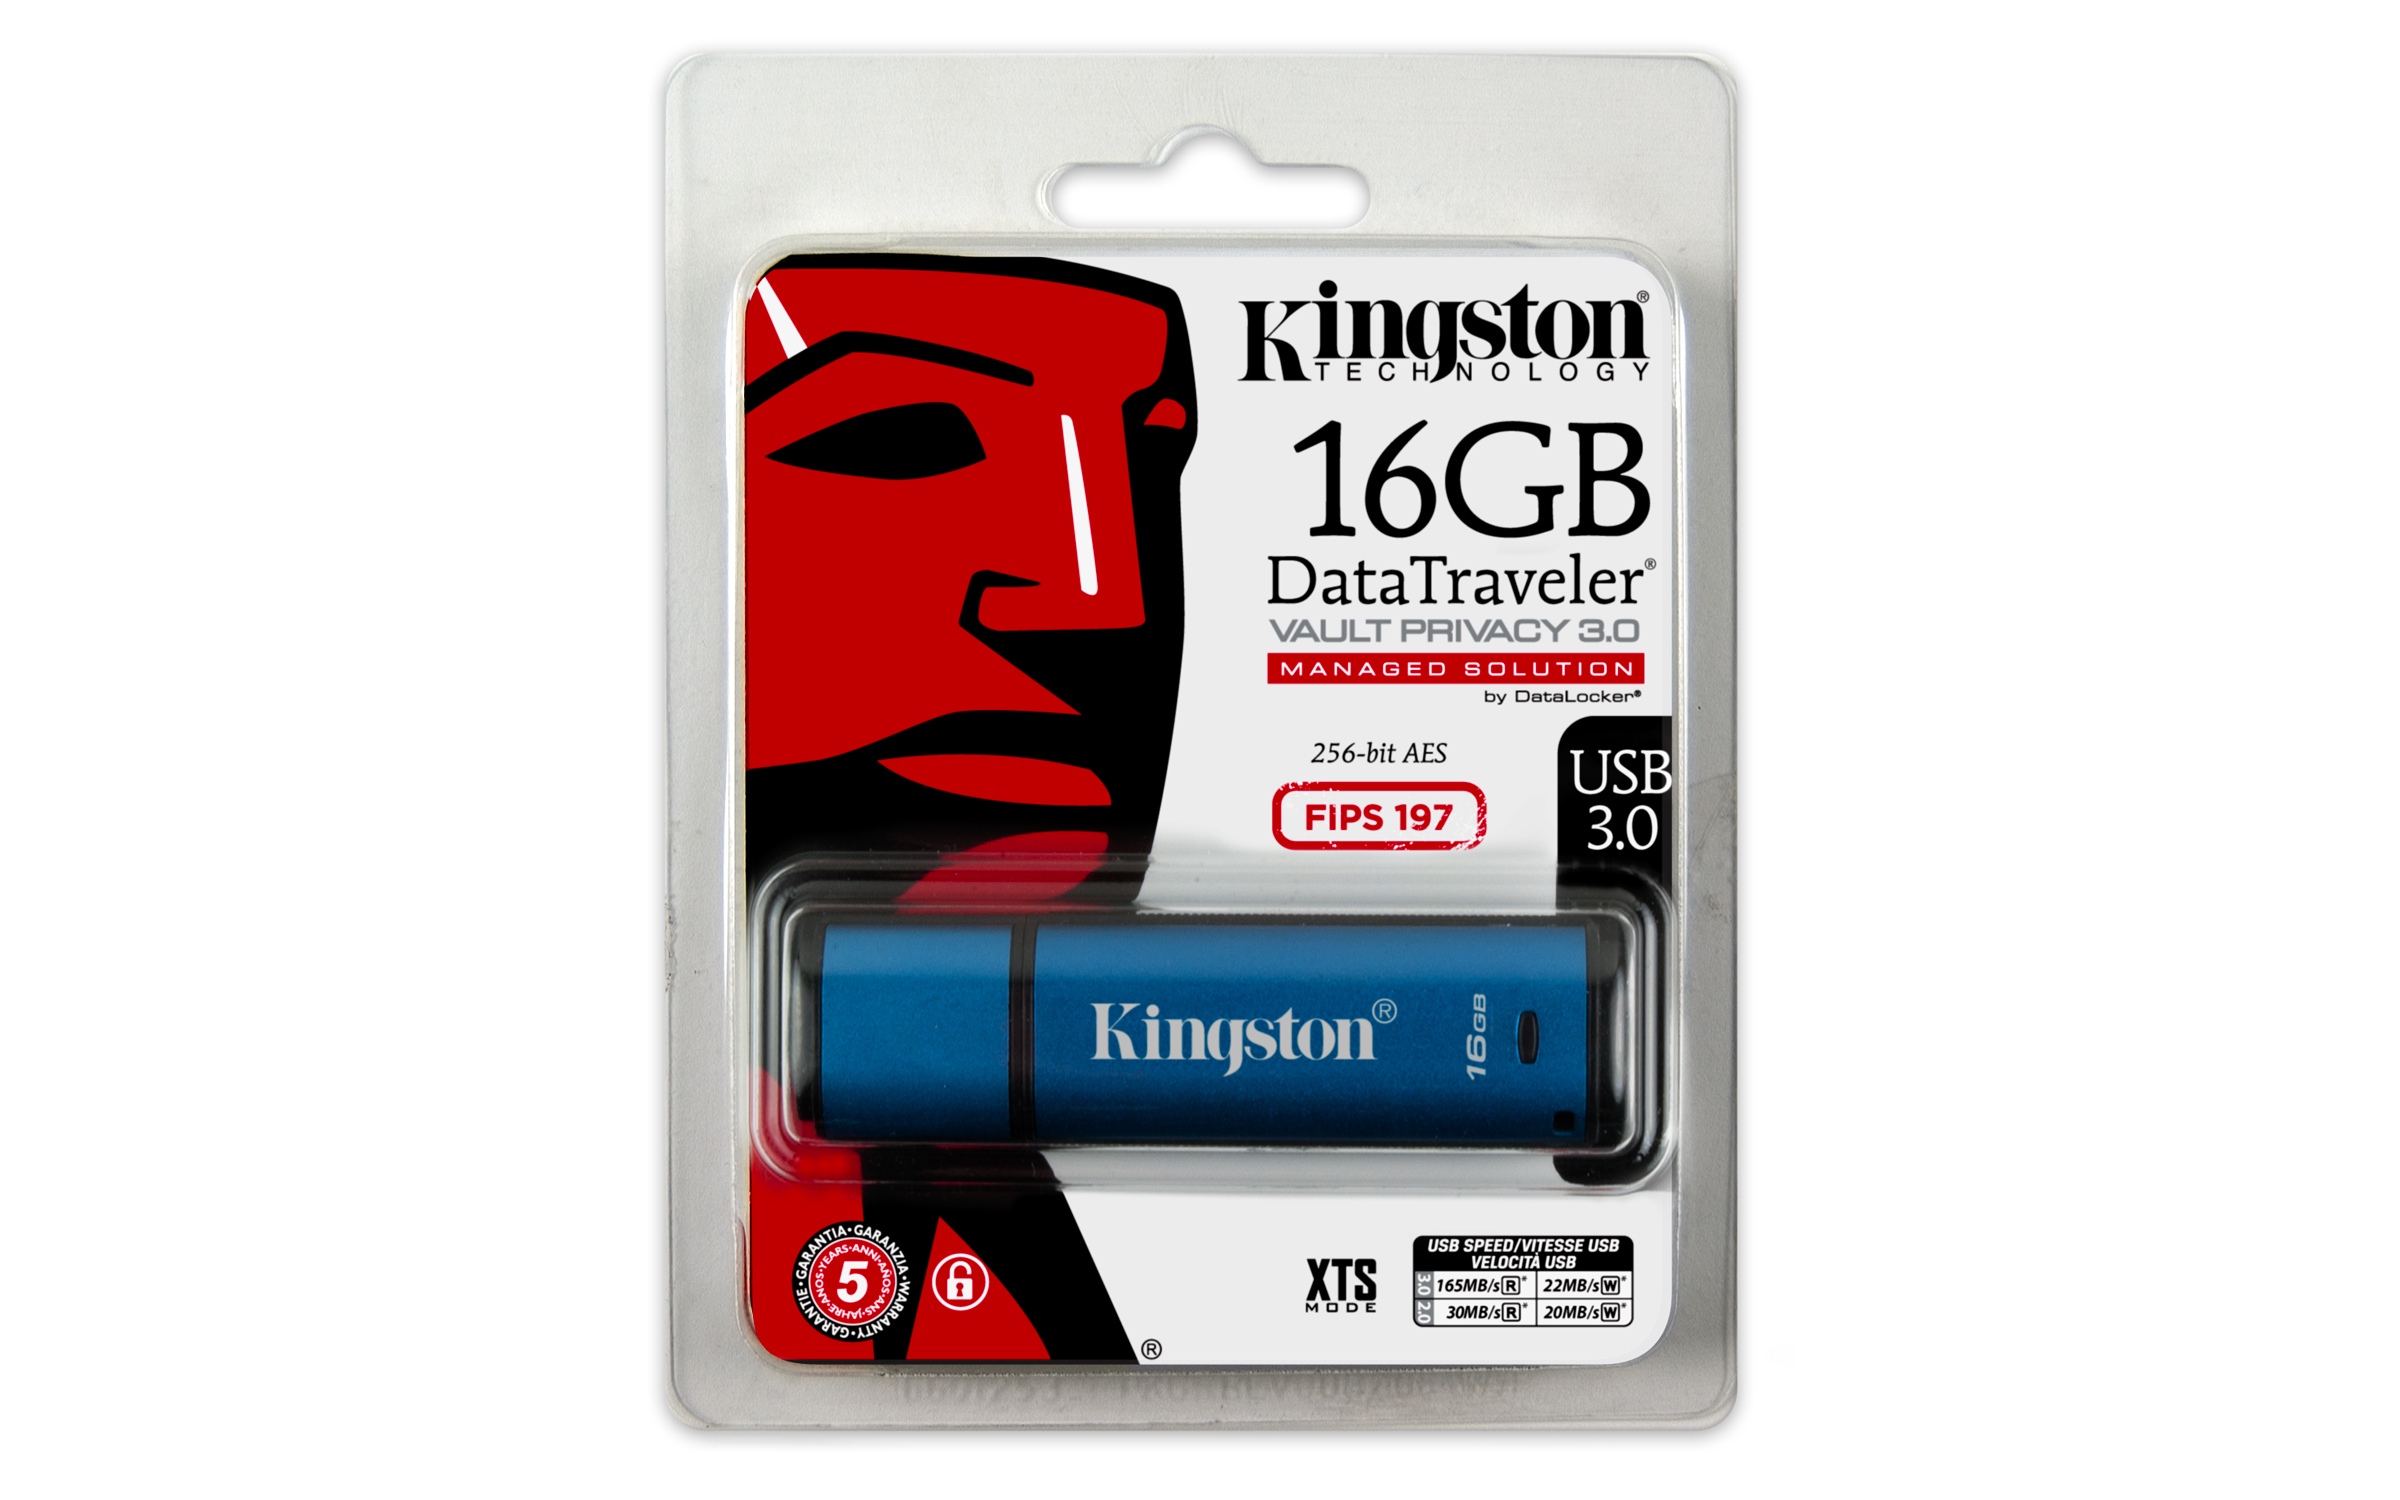 encryption buddy on a flash drive